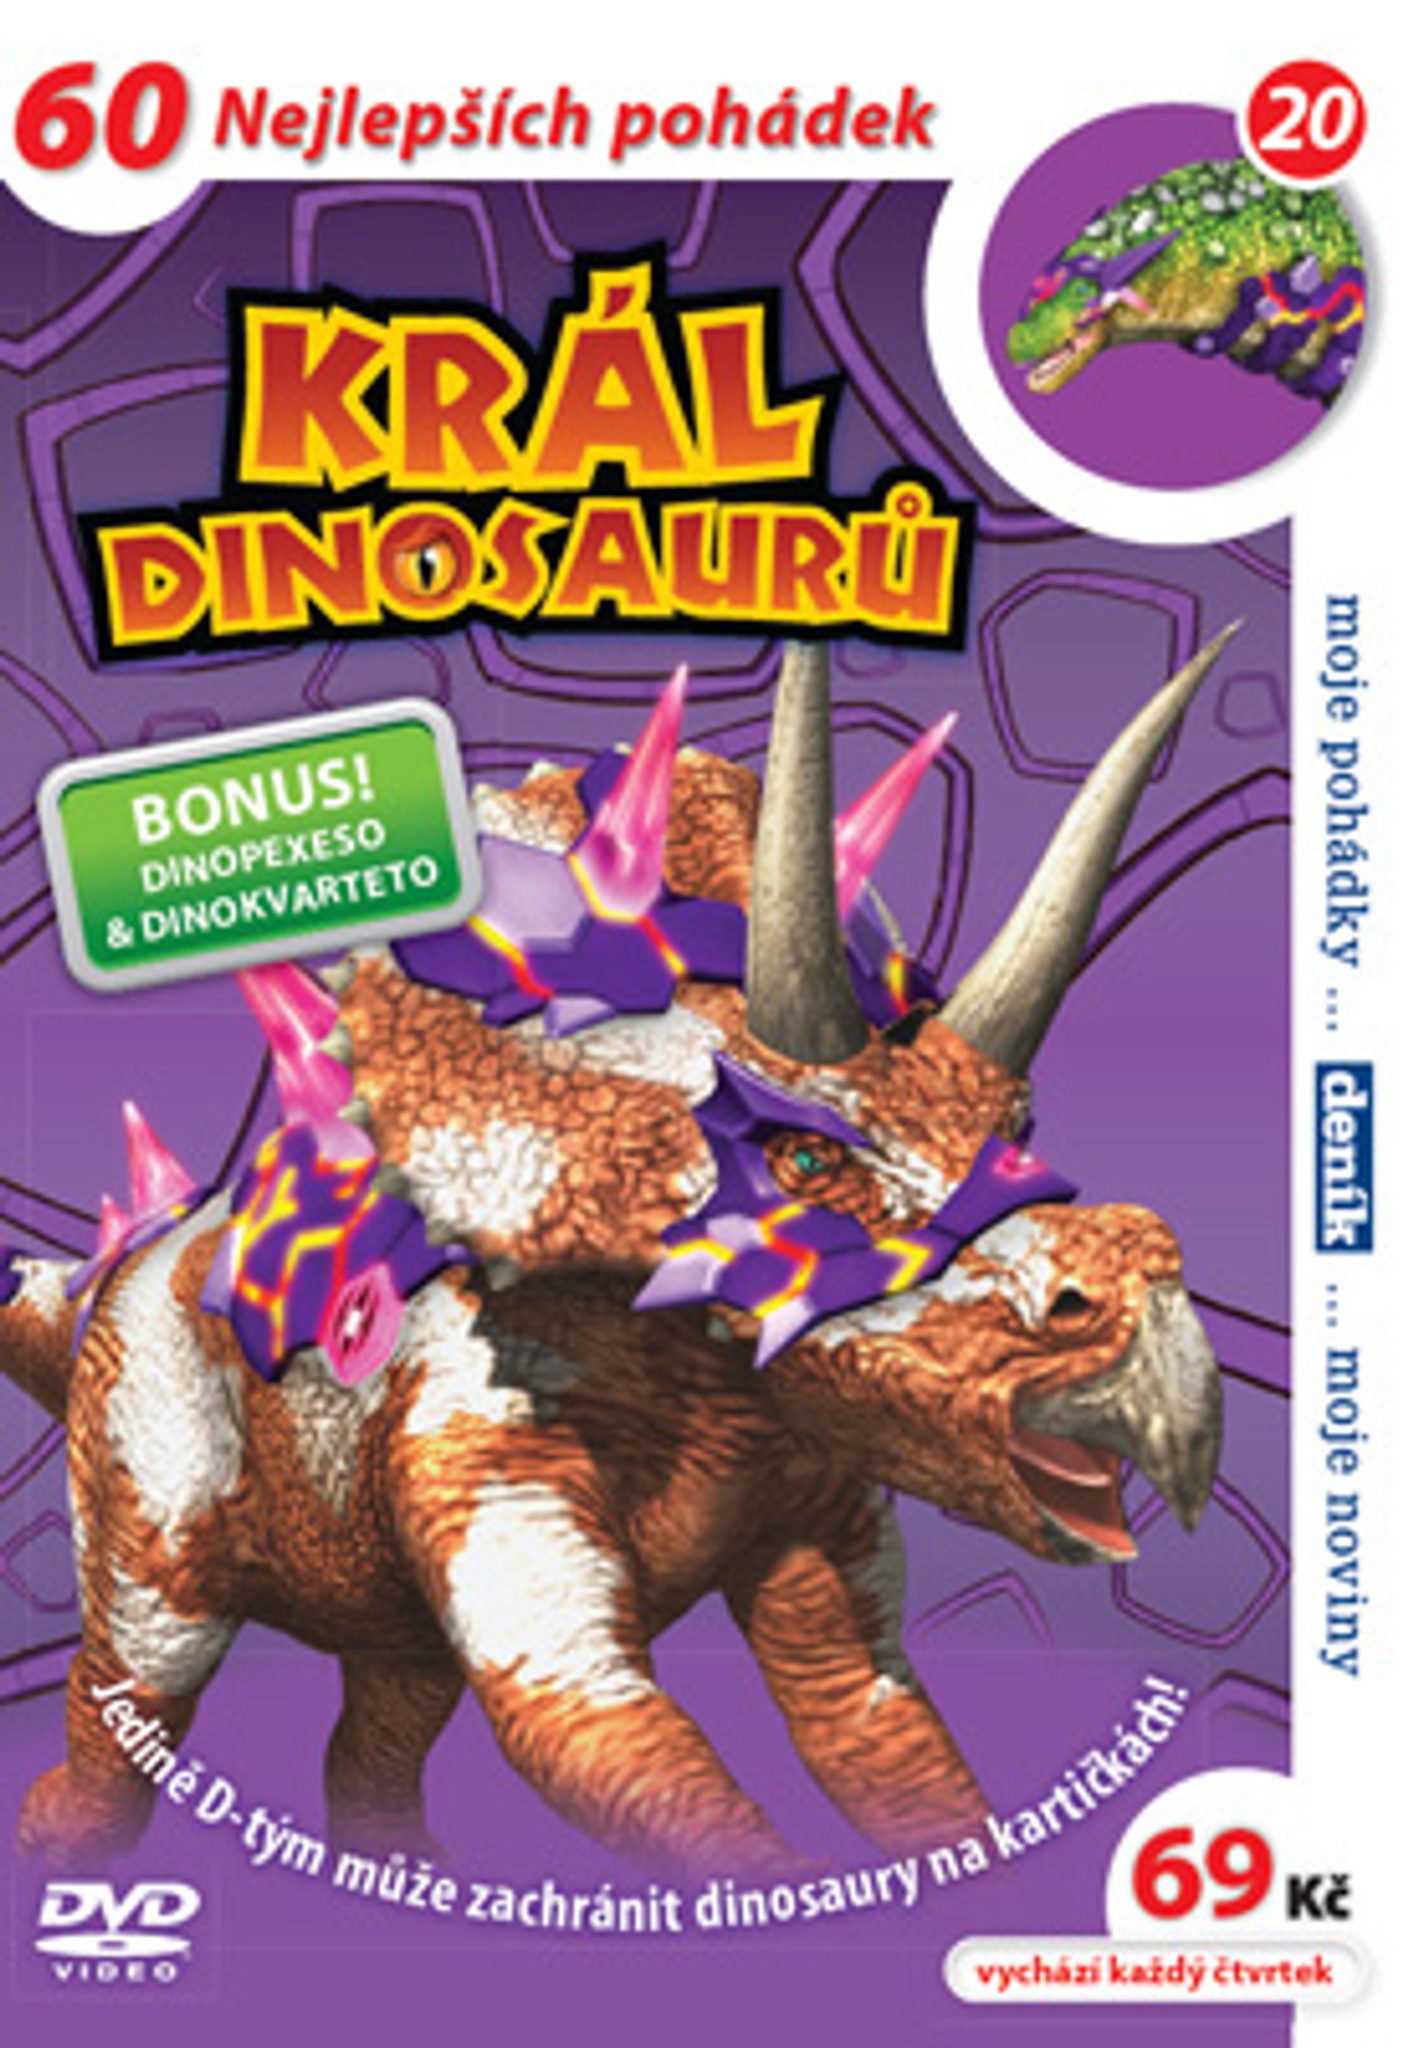 DVD Krl dinosaur 20